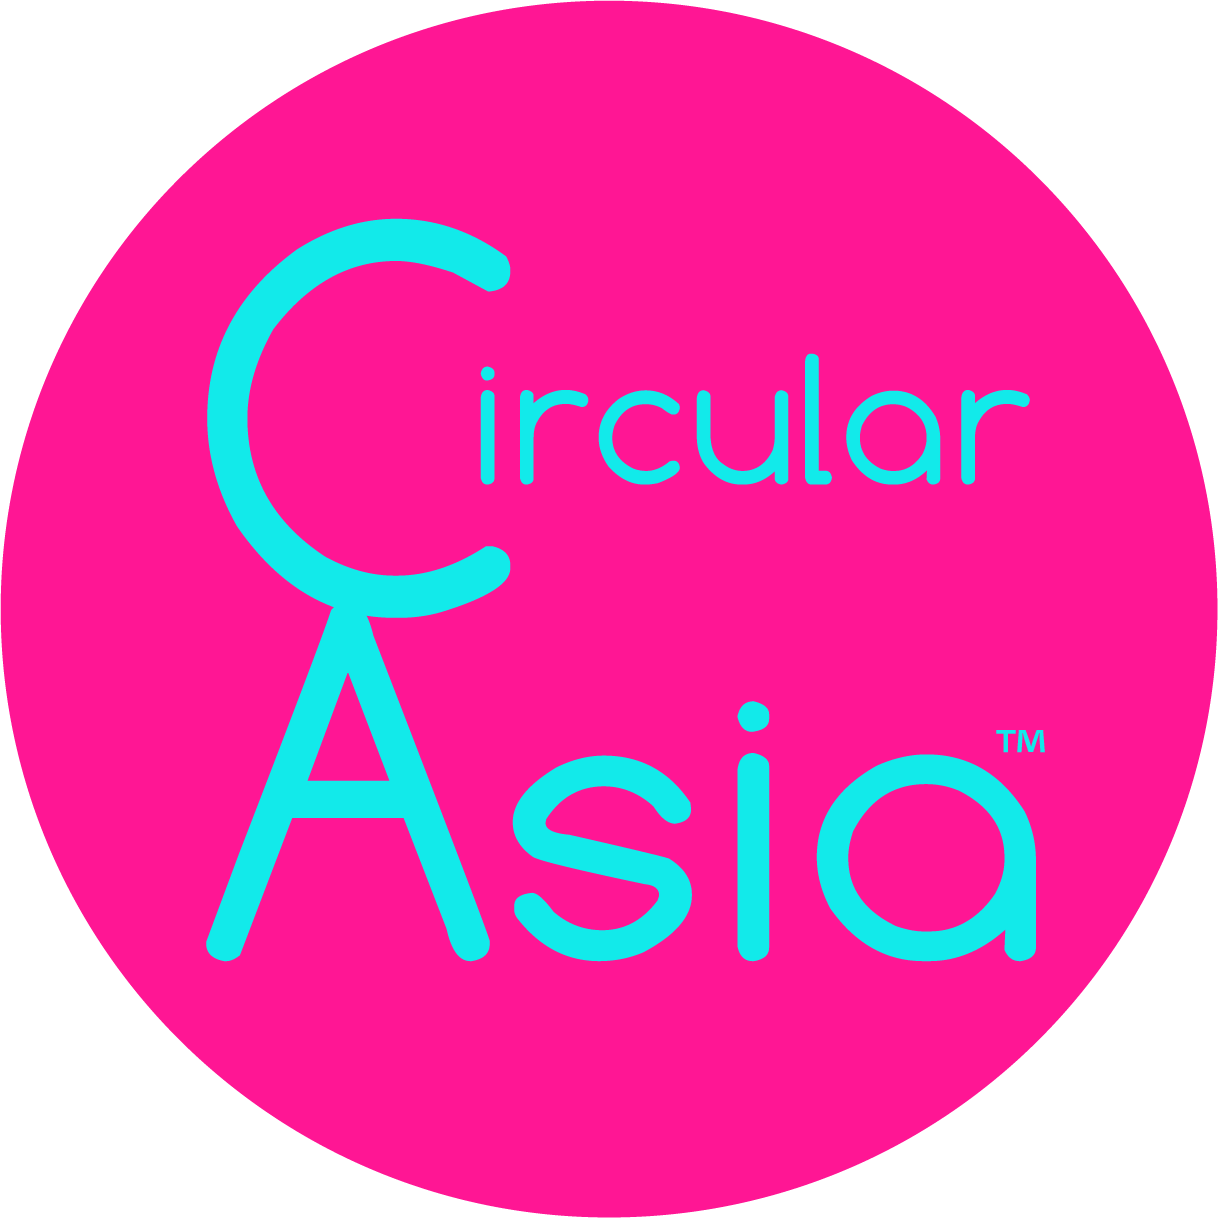 Circular Economy Asia